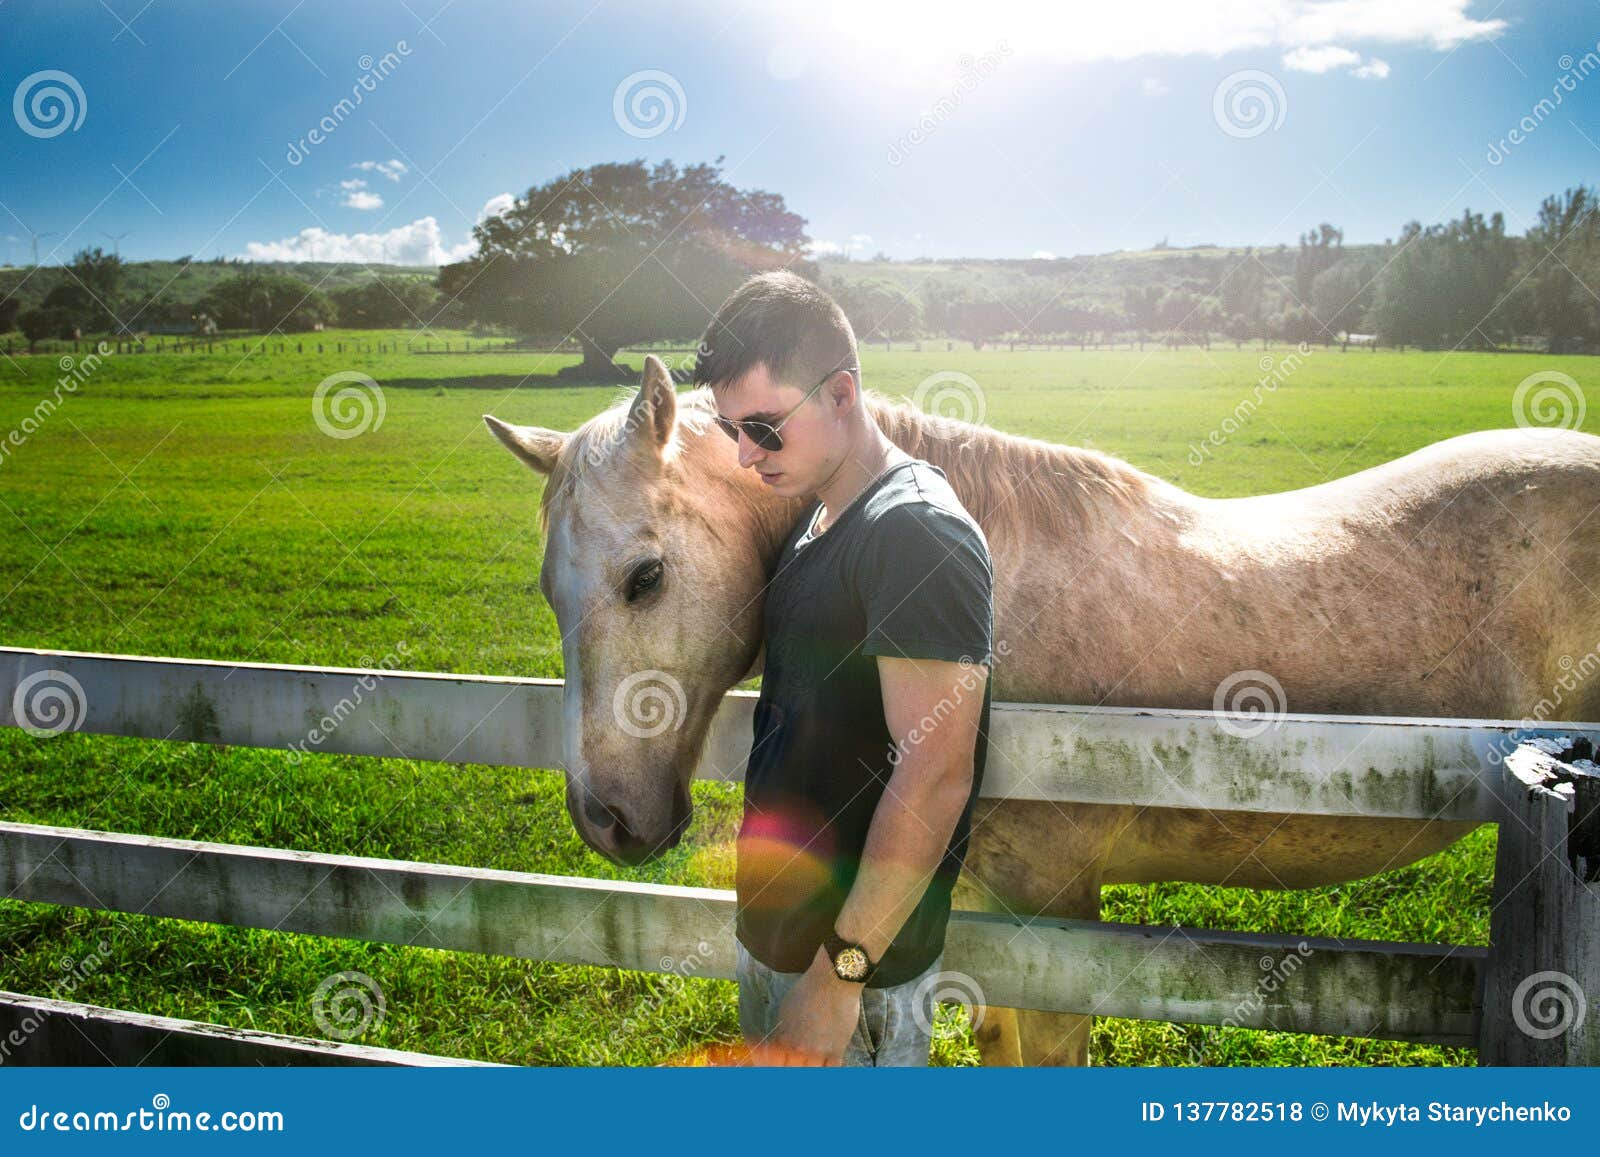 man hug white horse on rancho farm at sunny summer day.